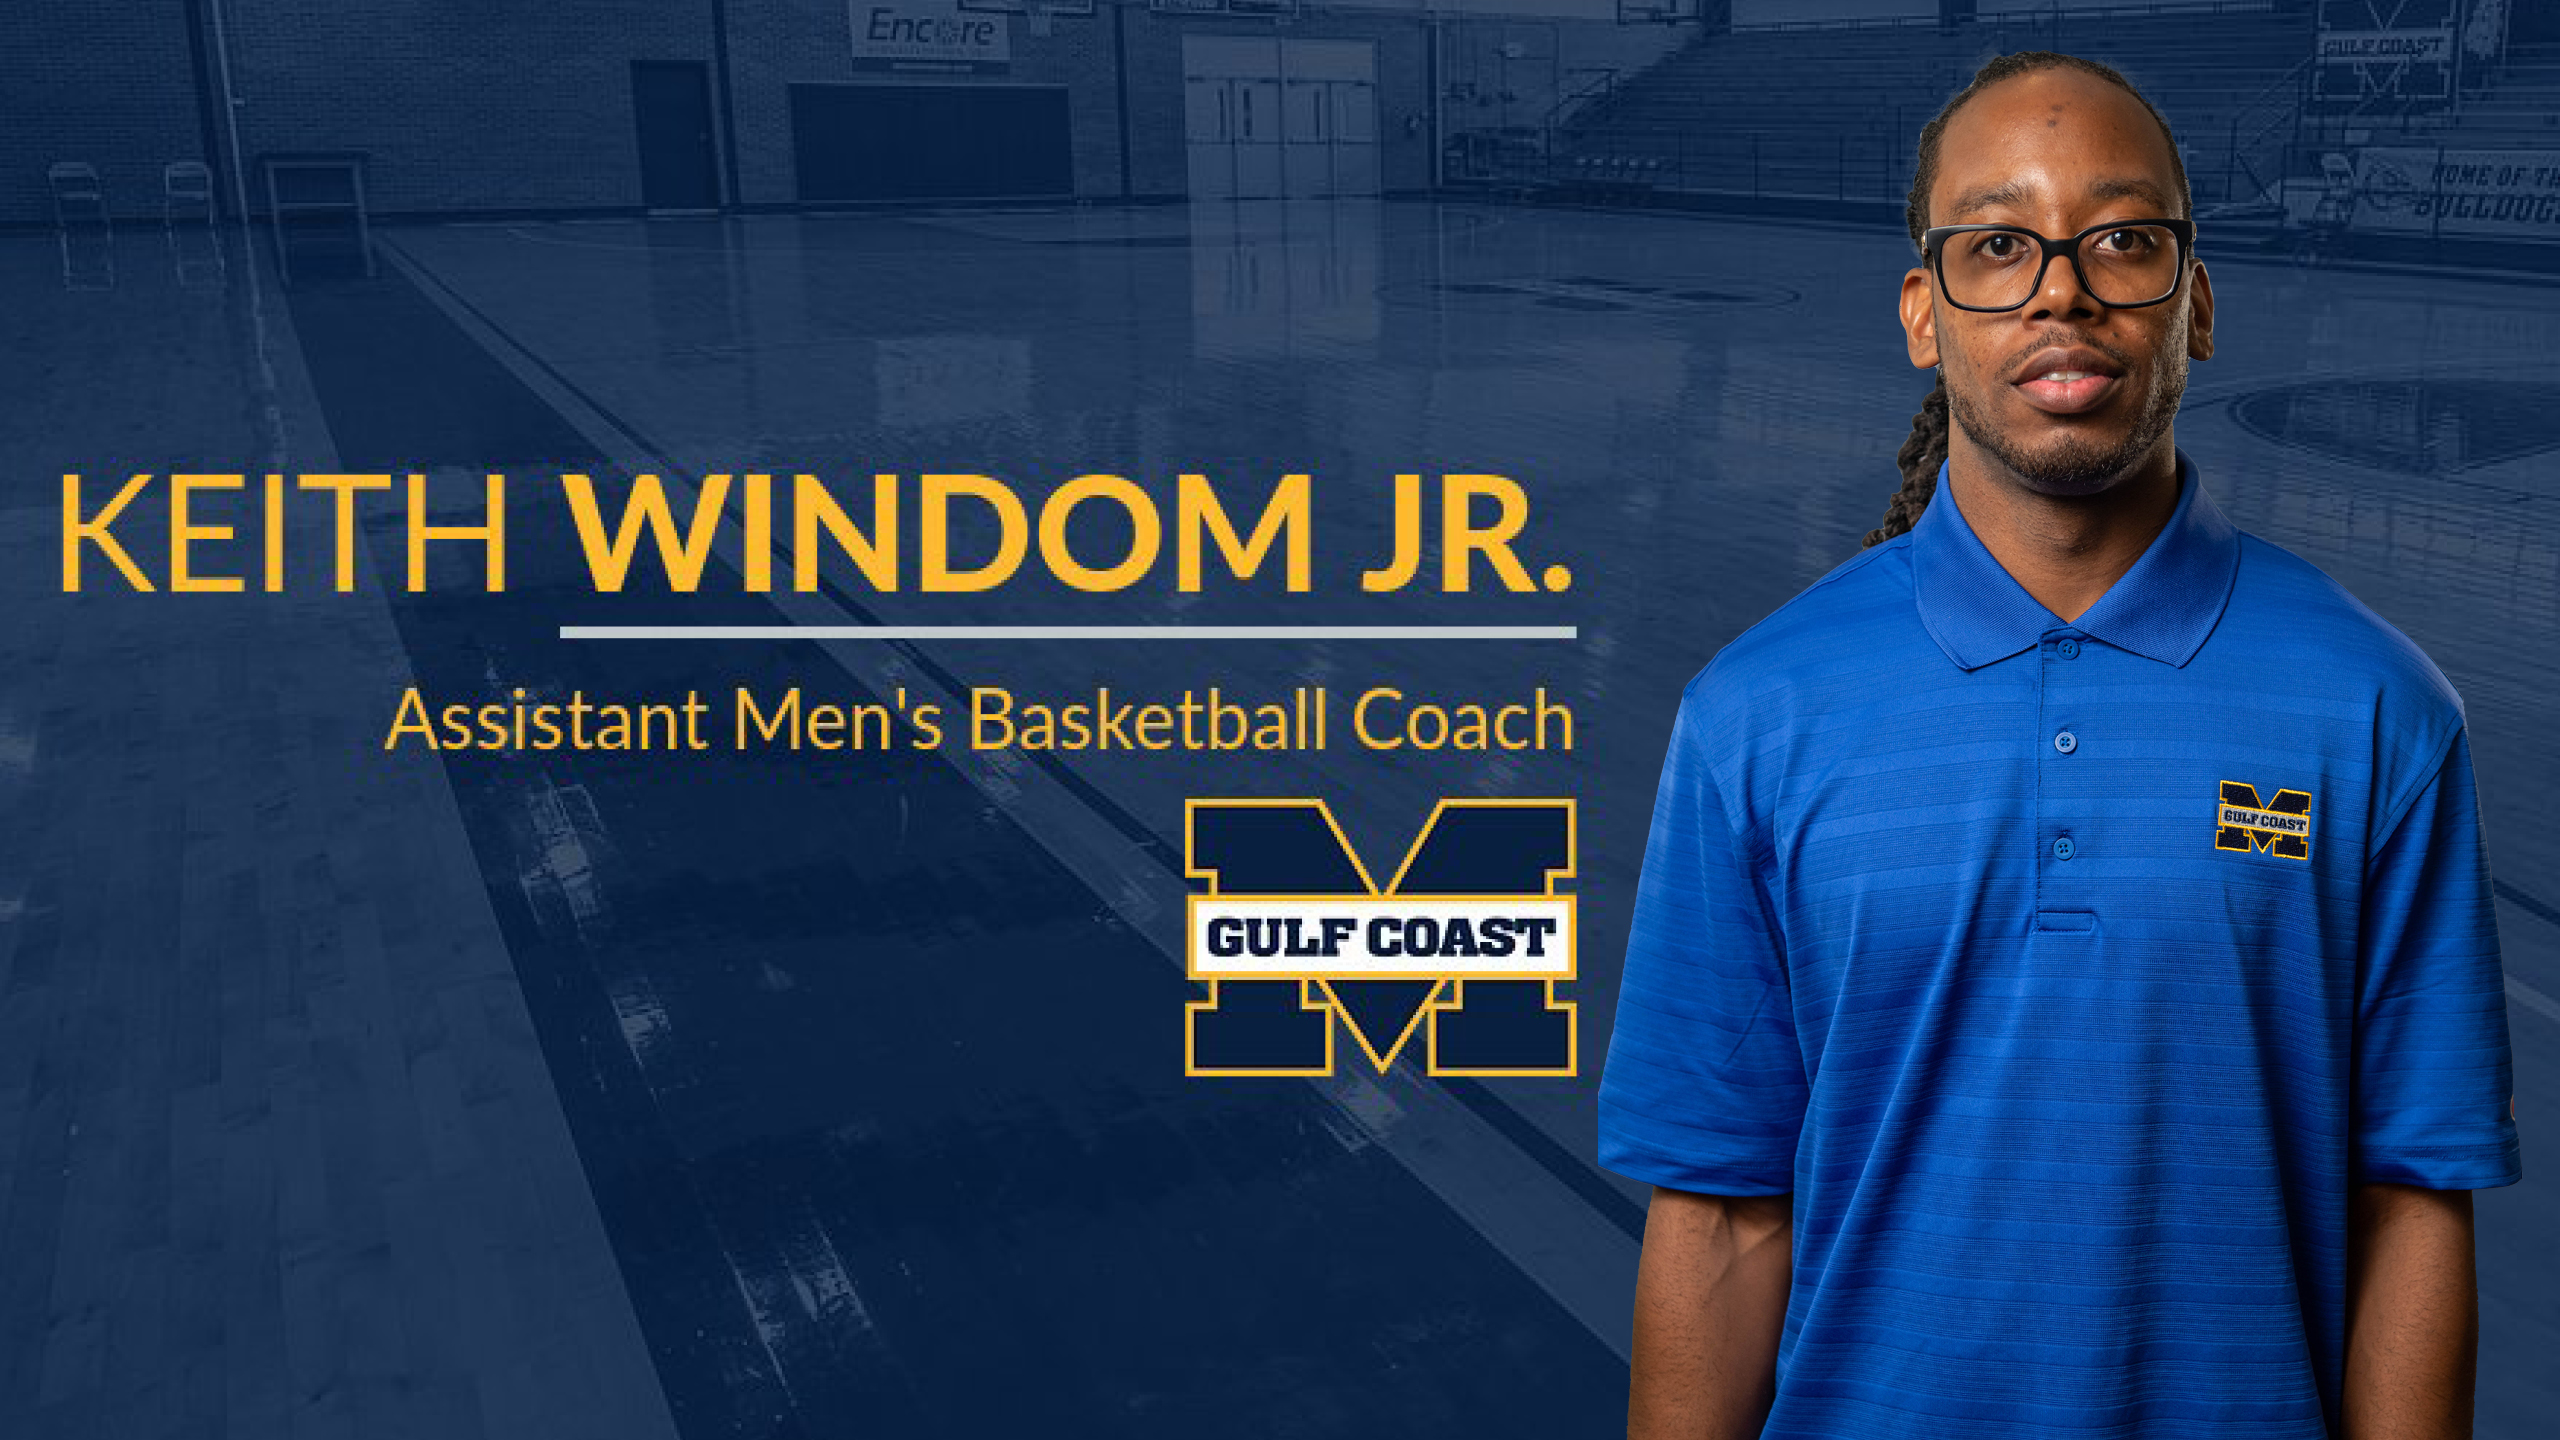 Windom joins Men’s Basketball staff